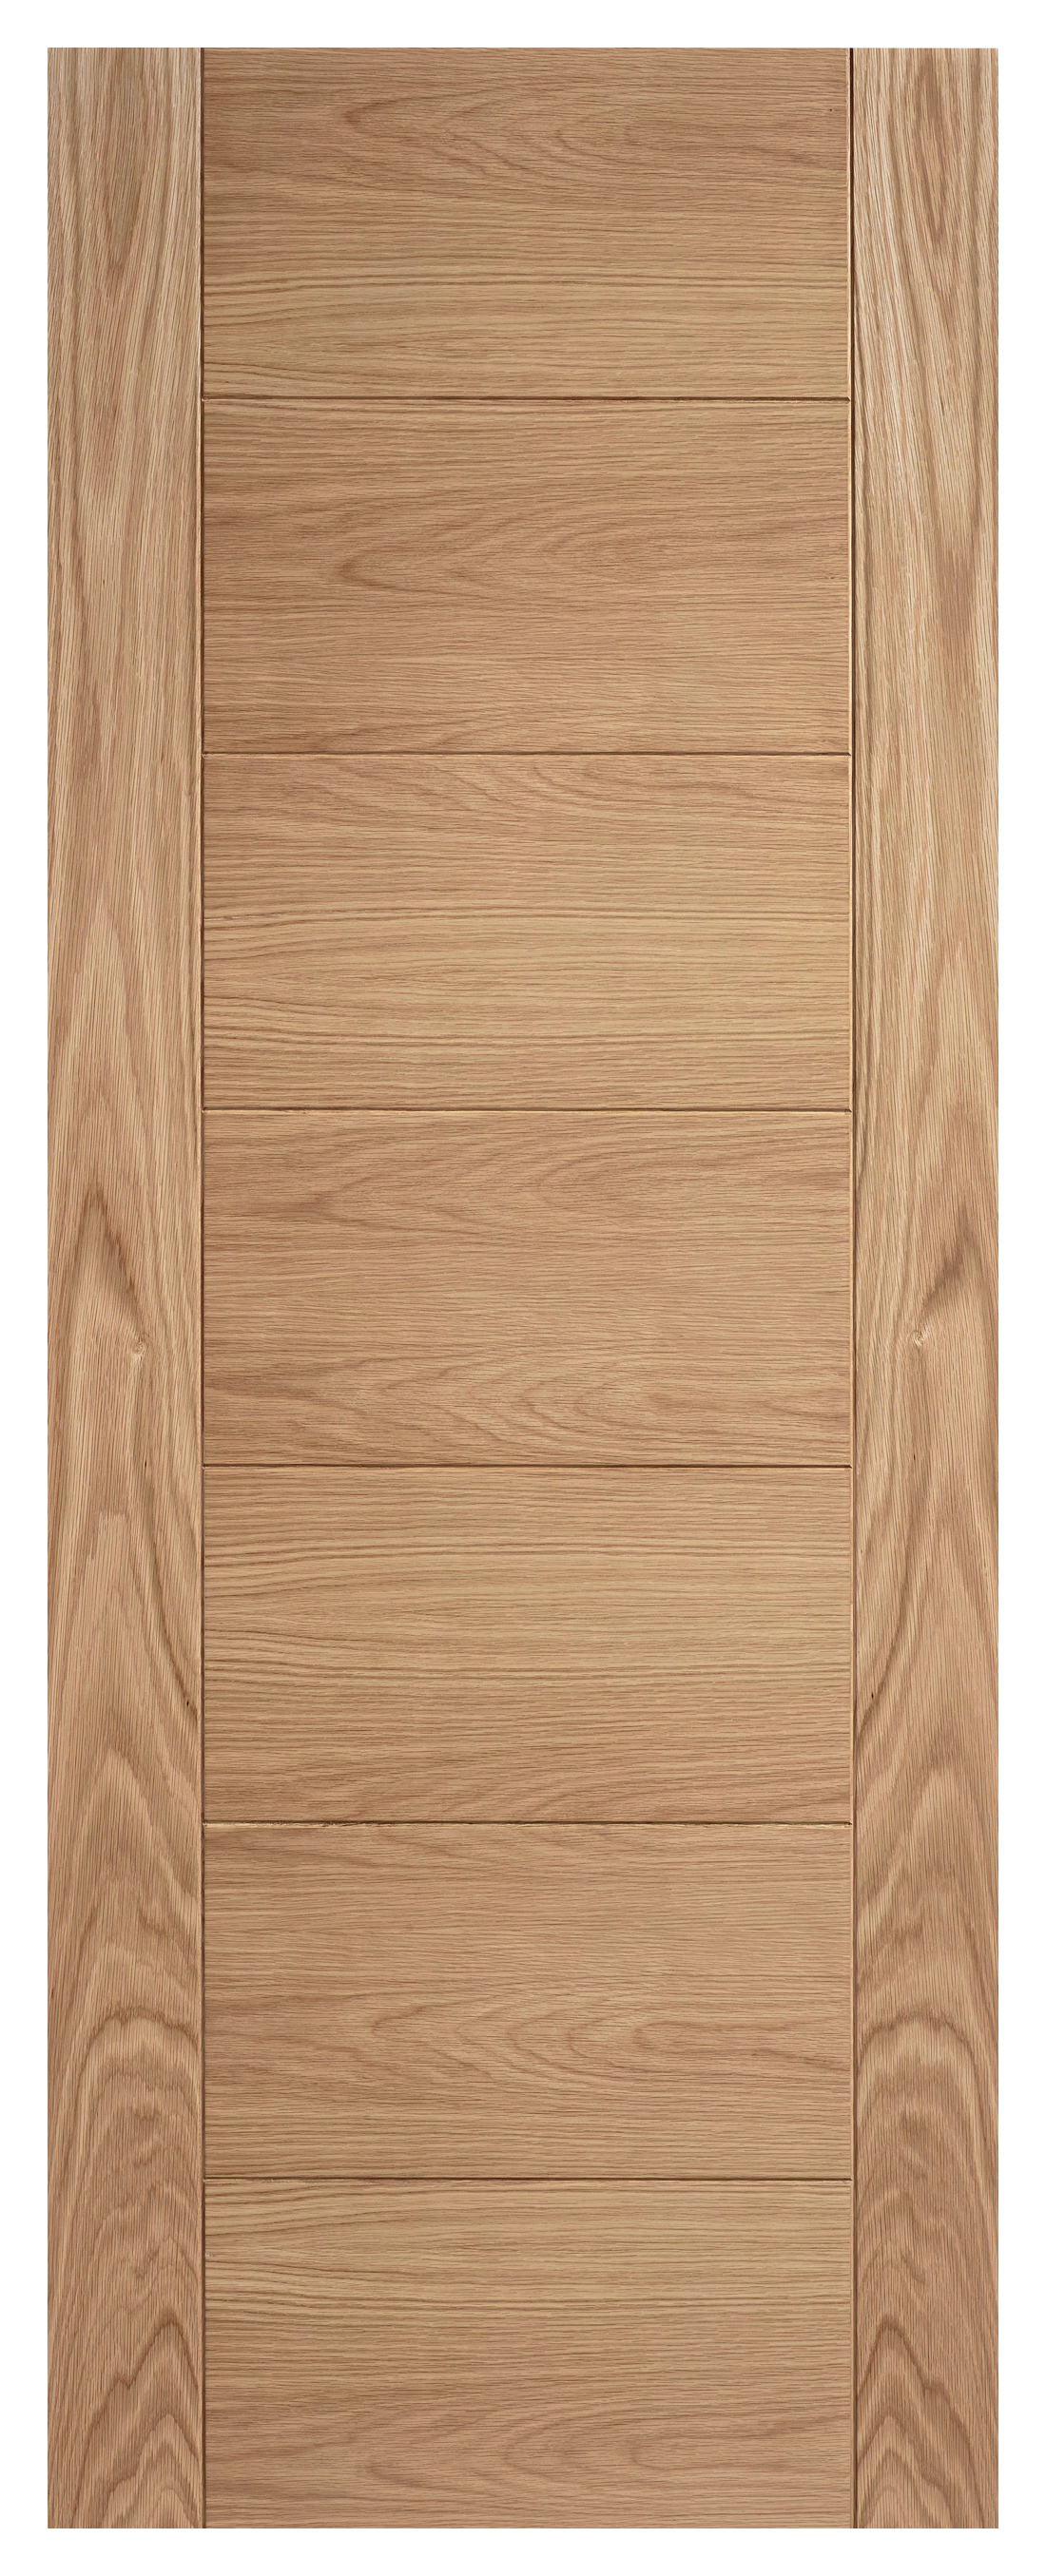 LPD Internal Carini 7 Panel Unfinished Oak Door - 1981mm